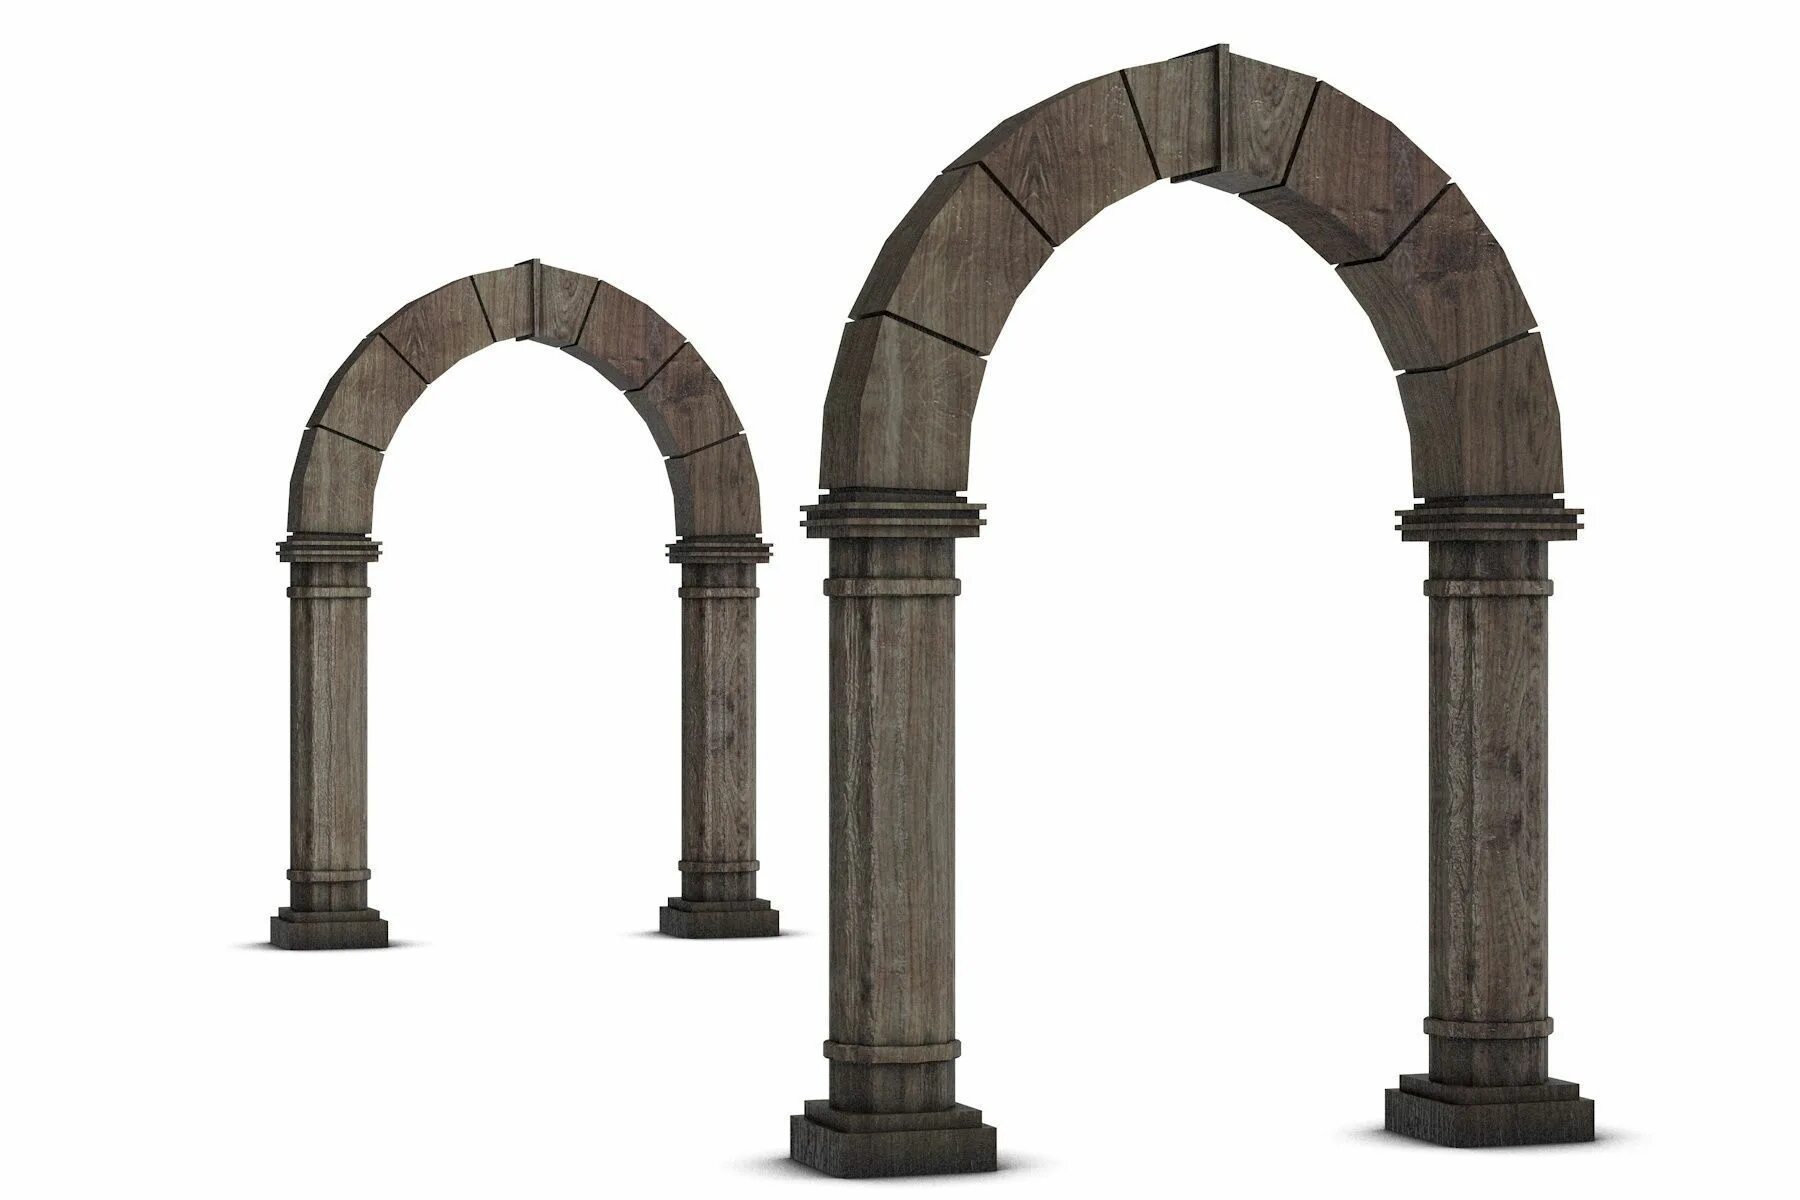 Лицо арка. Арка ВДНХ 3d модель. 3ds Max модель арки. Деревянная арка. Каменная арка.